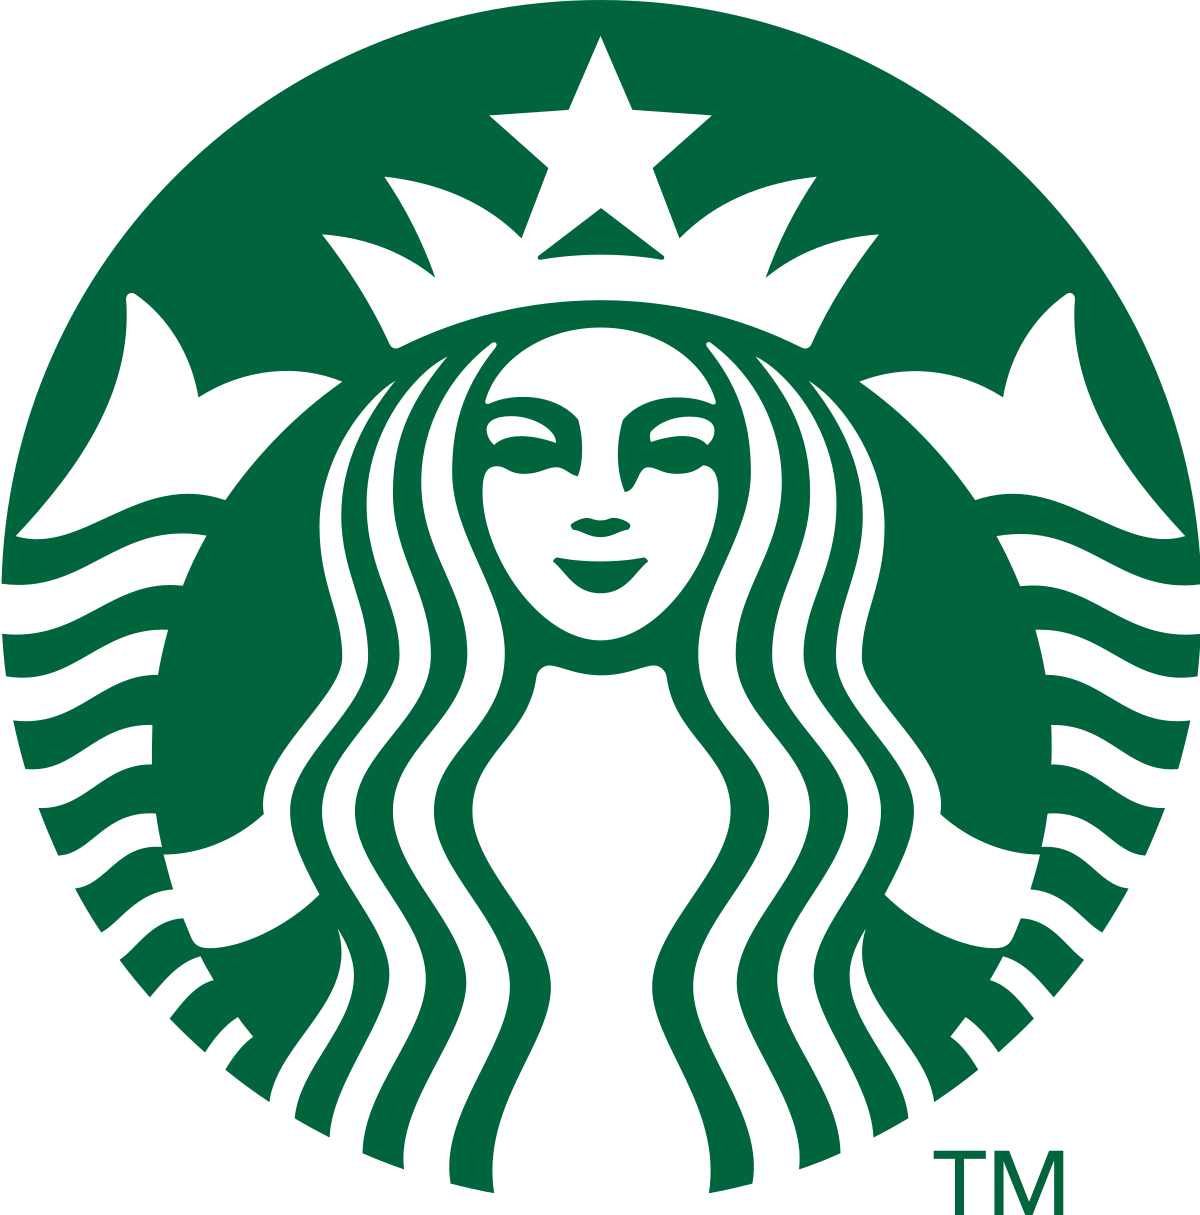 Starbucks Wikipedia